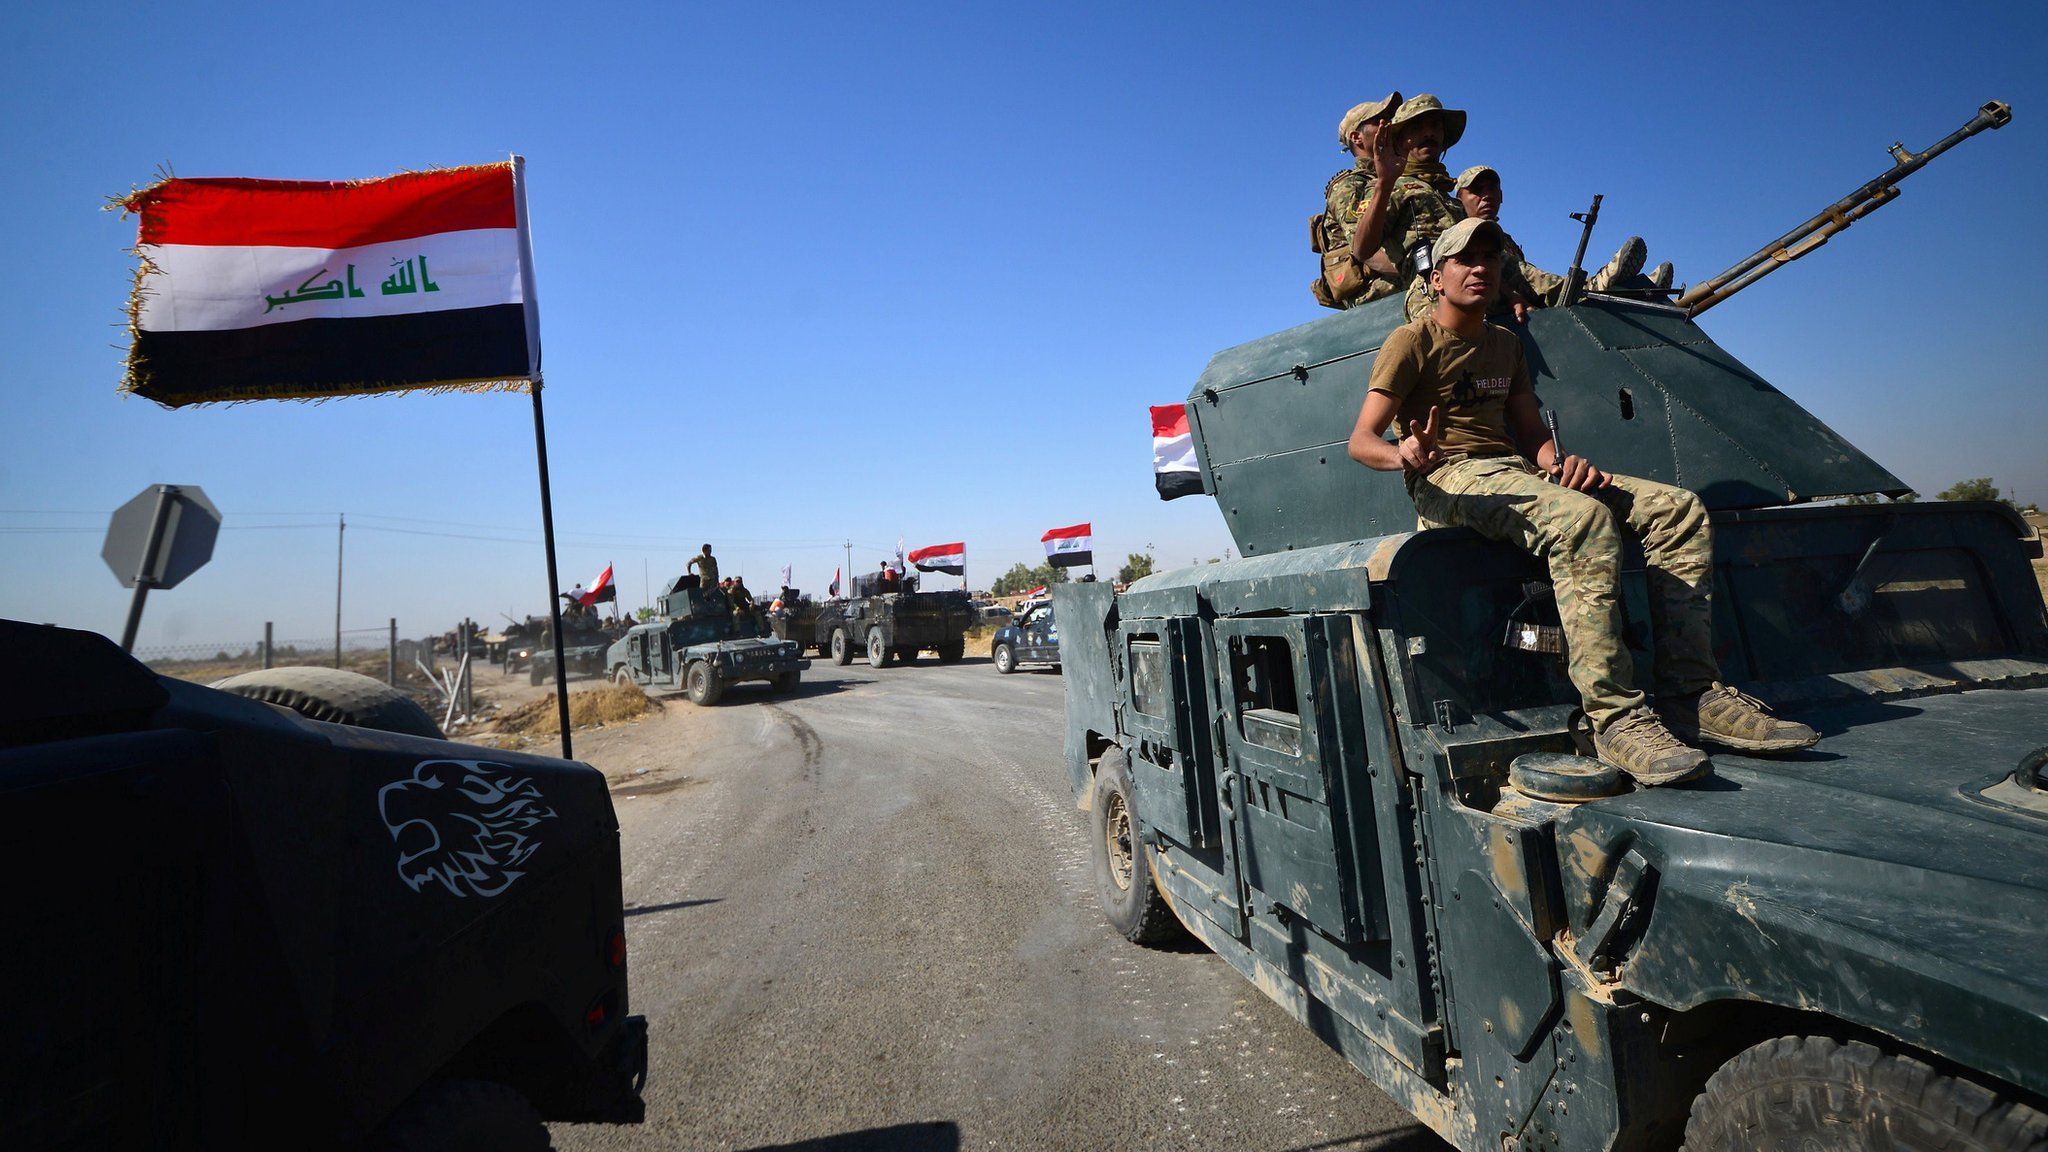 Iraqi forces advance in military vehicles in Kirkuk, Iraq (16 October 2017)